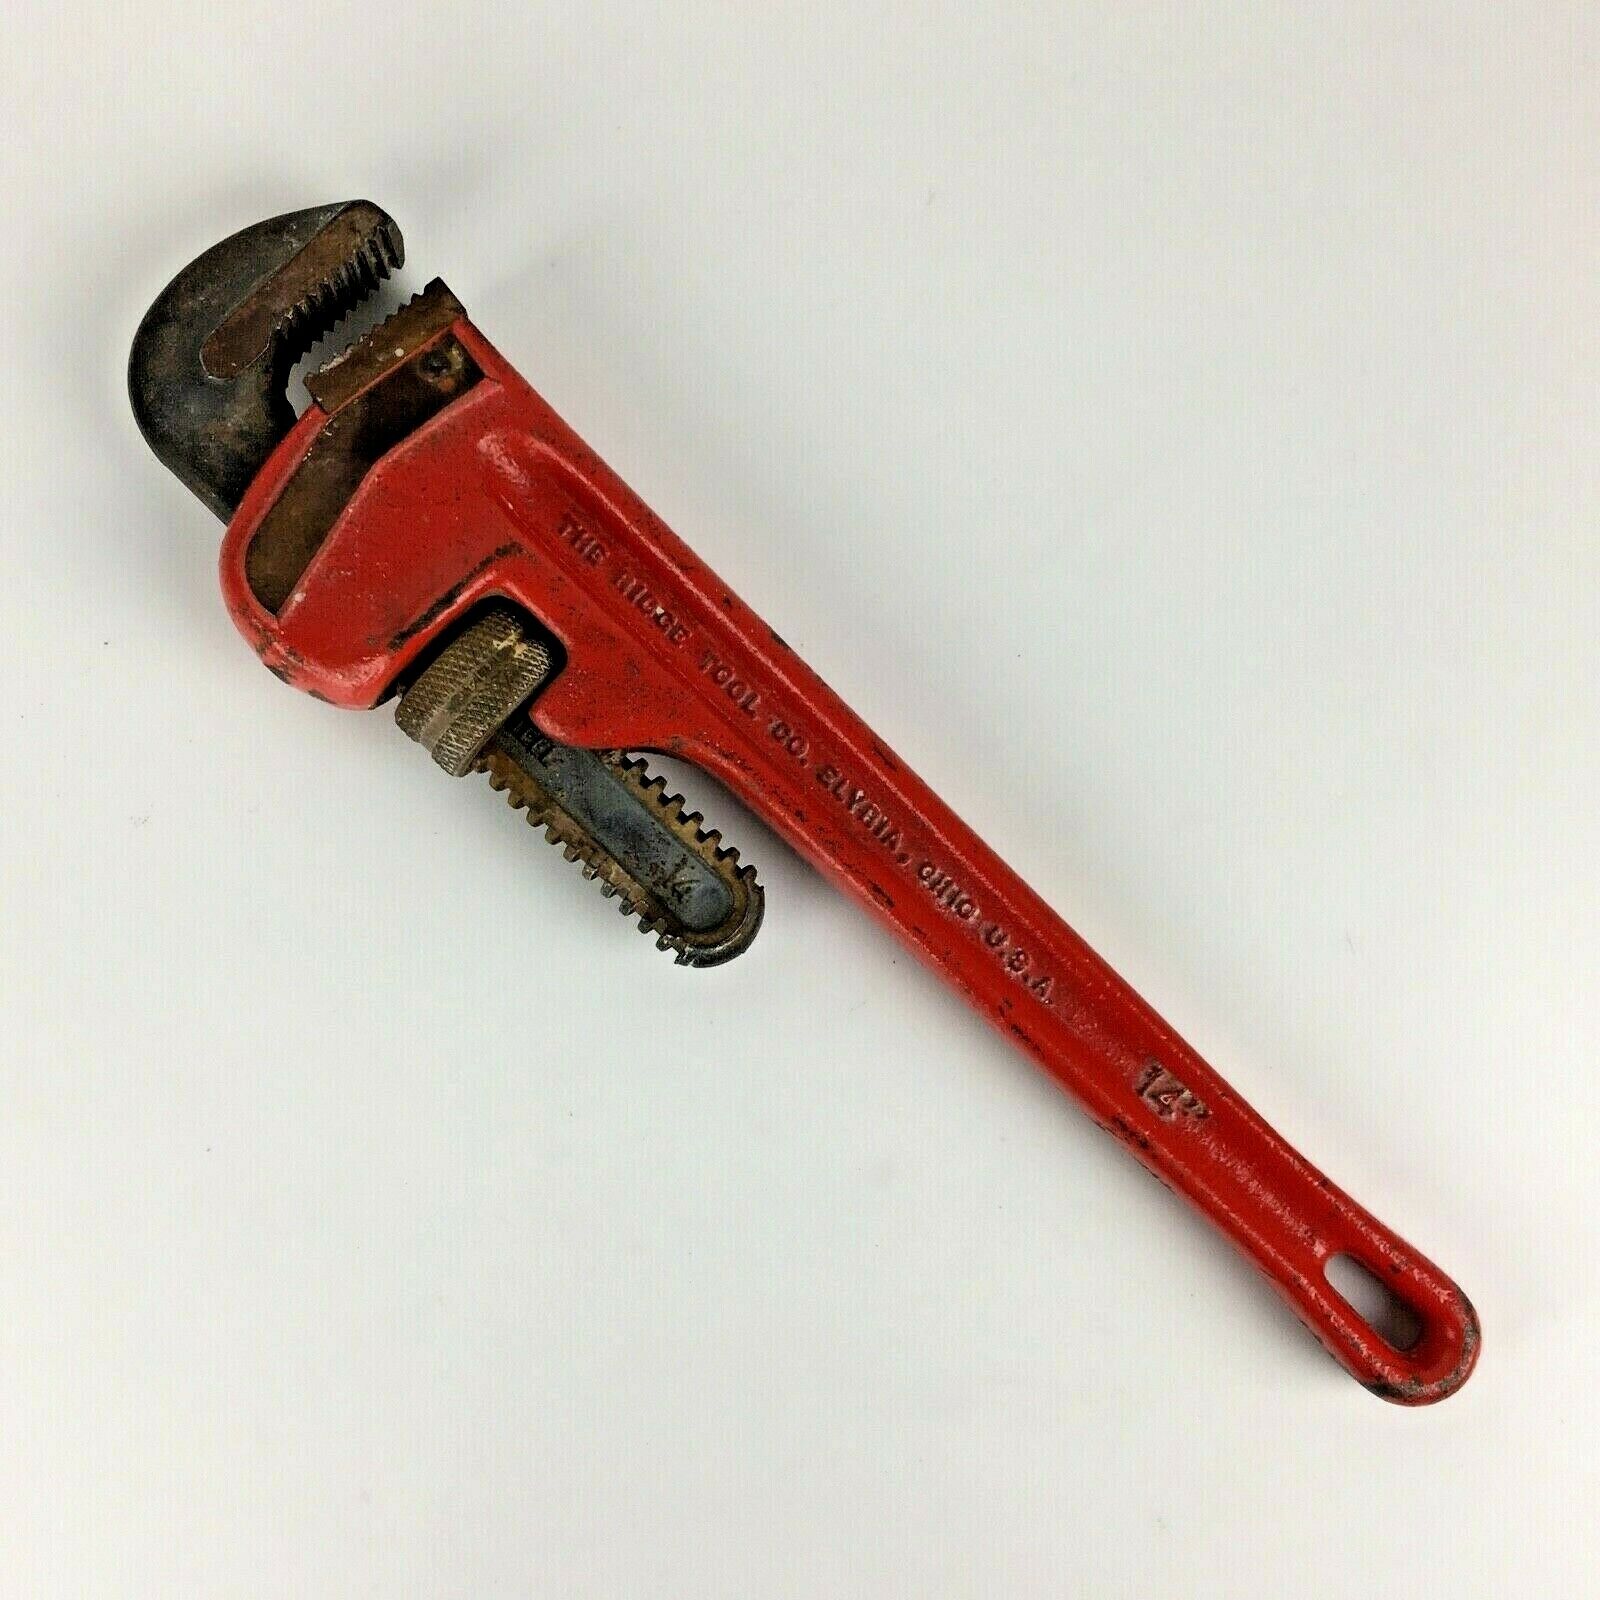 RIDGID Red Wrench 14” Pipe Monkey Tool Plumbing Heavy Duty Adjustable Vtg Gift